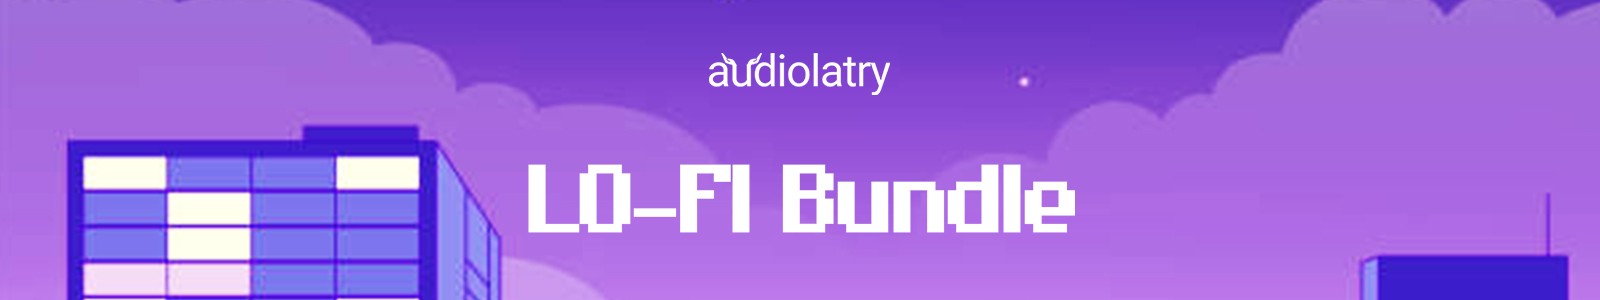 LoFi Bundle by audiolatry